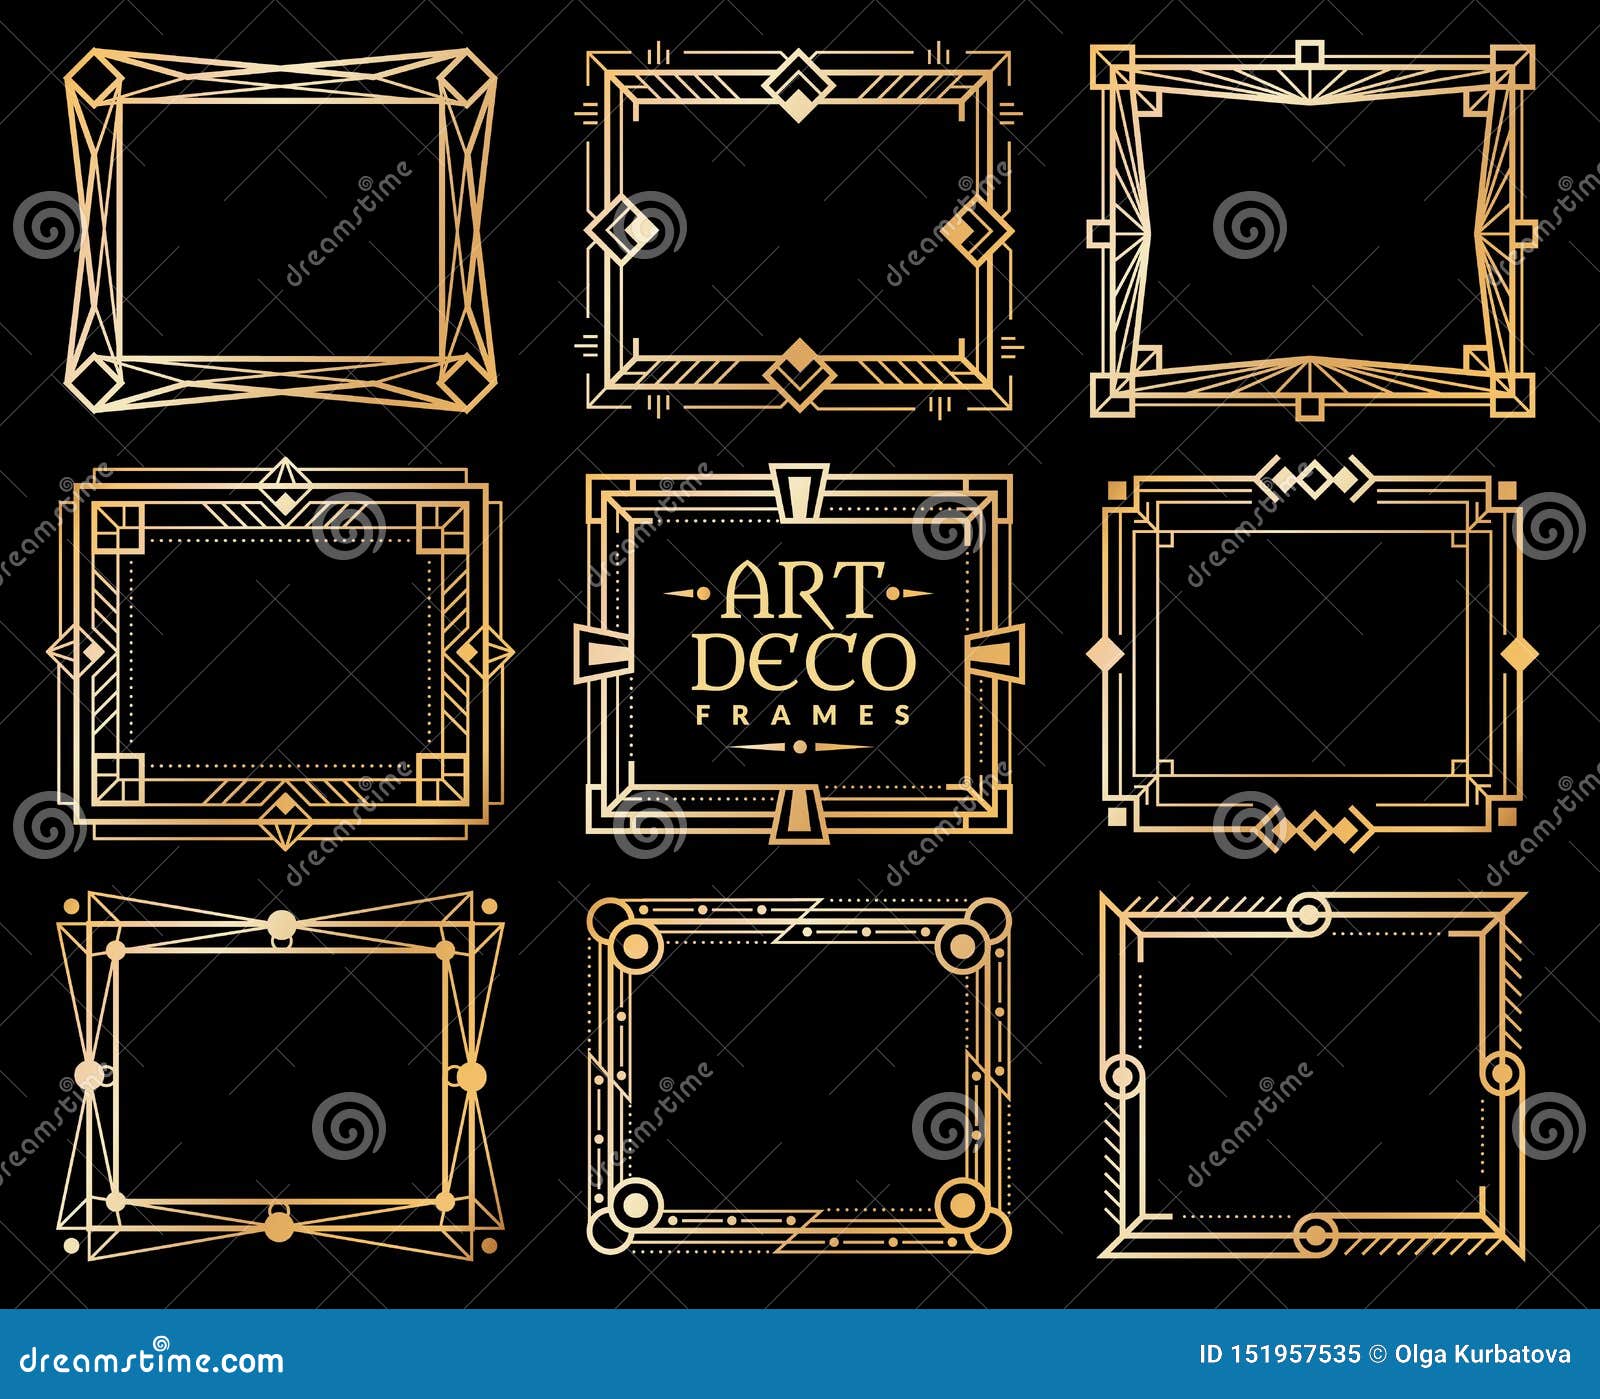 art deco frames. gold gatsby deco frame border, golden romantic invitation line pattern. 1920s retro luxury art 